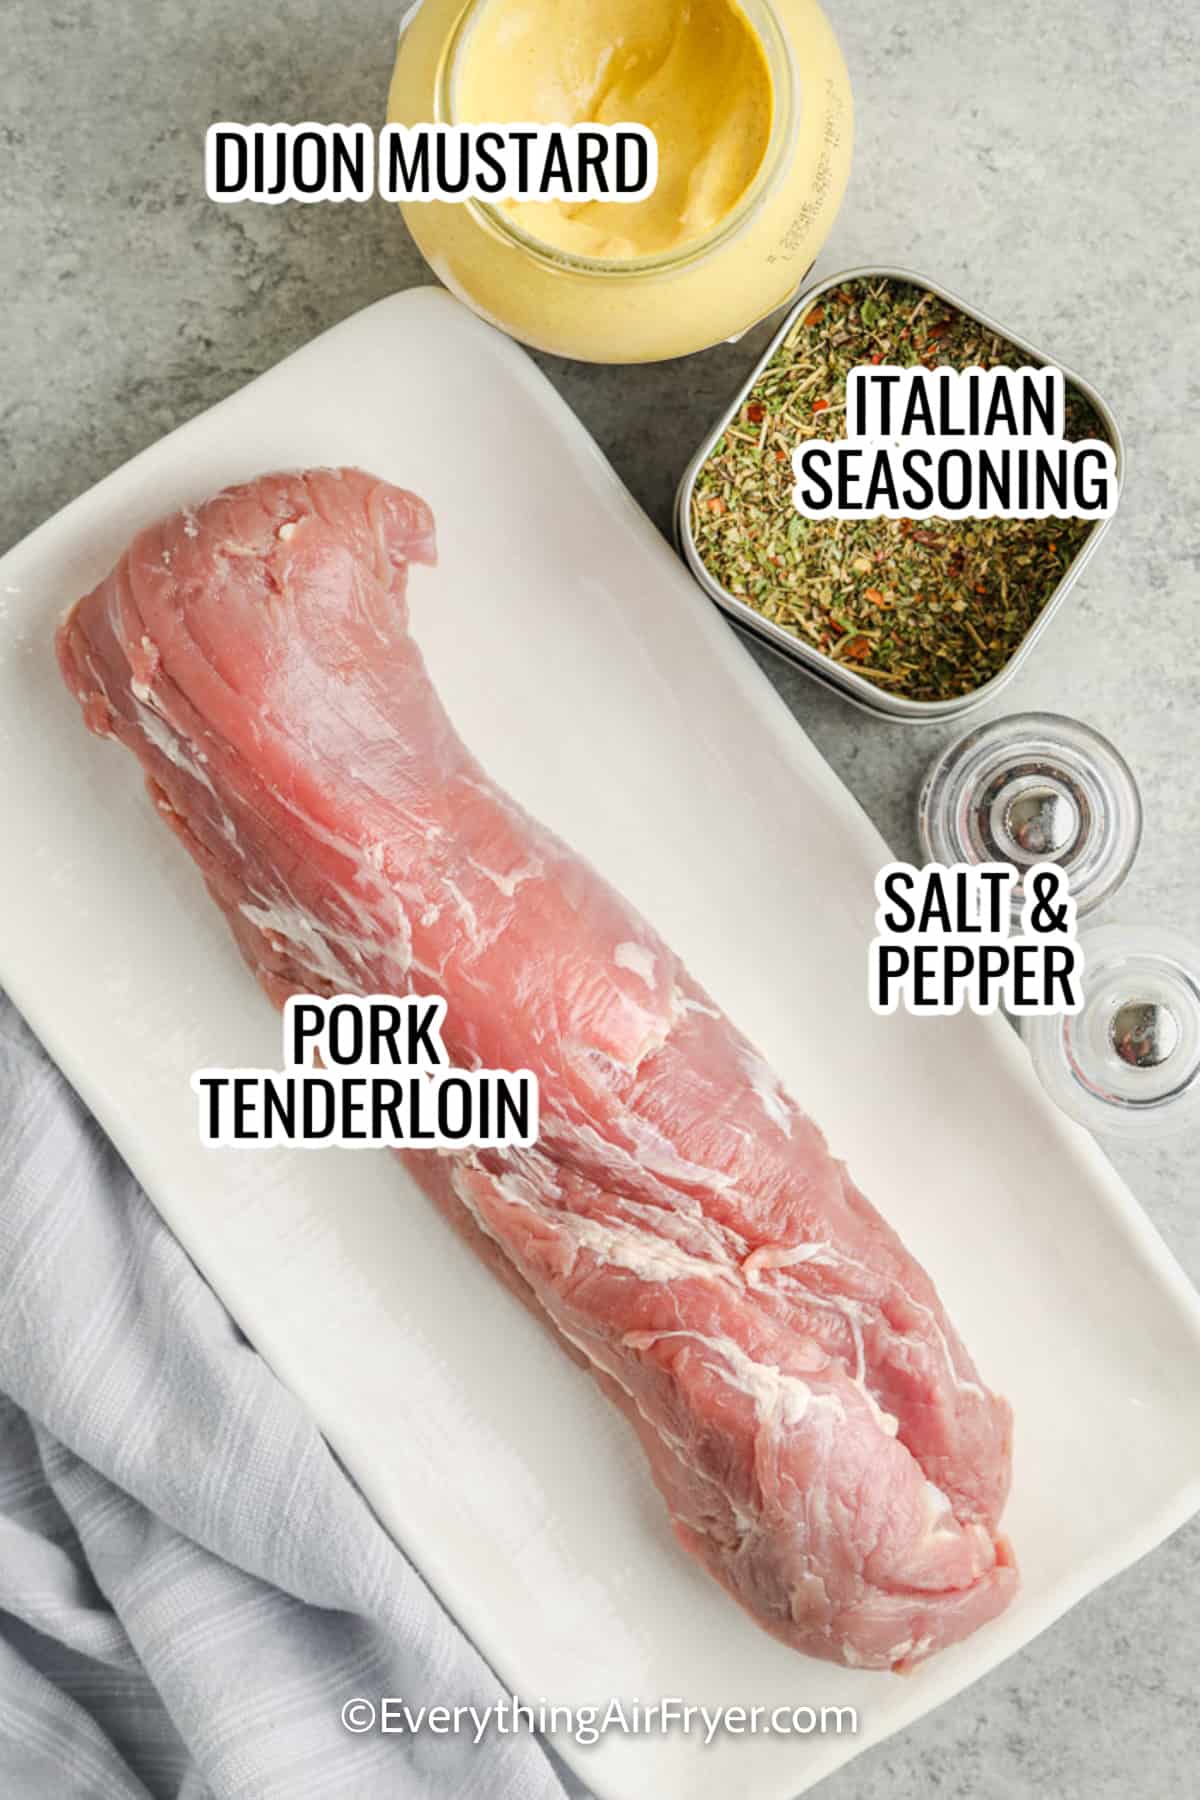 ingredients assembled to make air fryer pork tenderloin, including pork, dijon mustard, italian seasoning, and salt and pepper